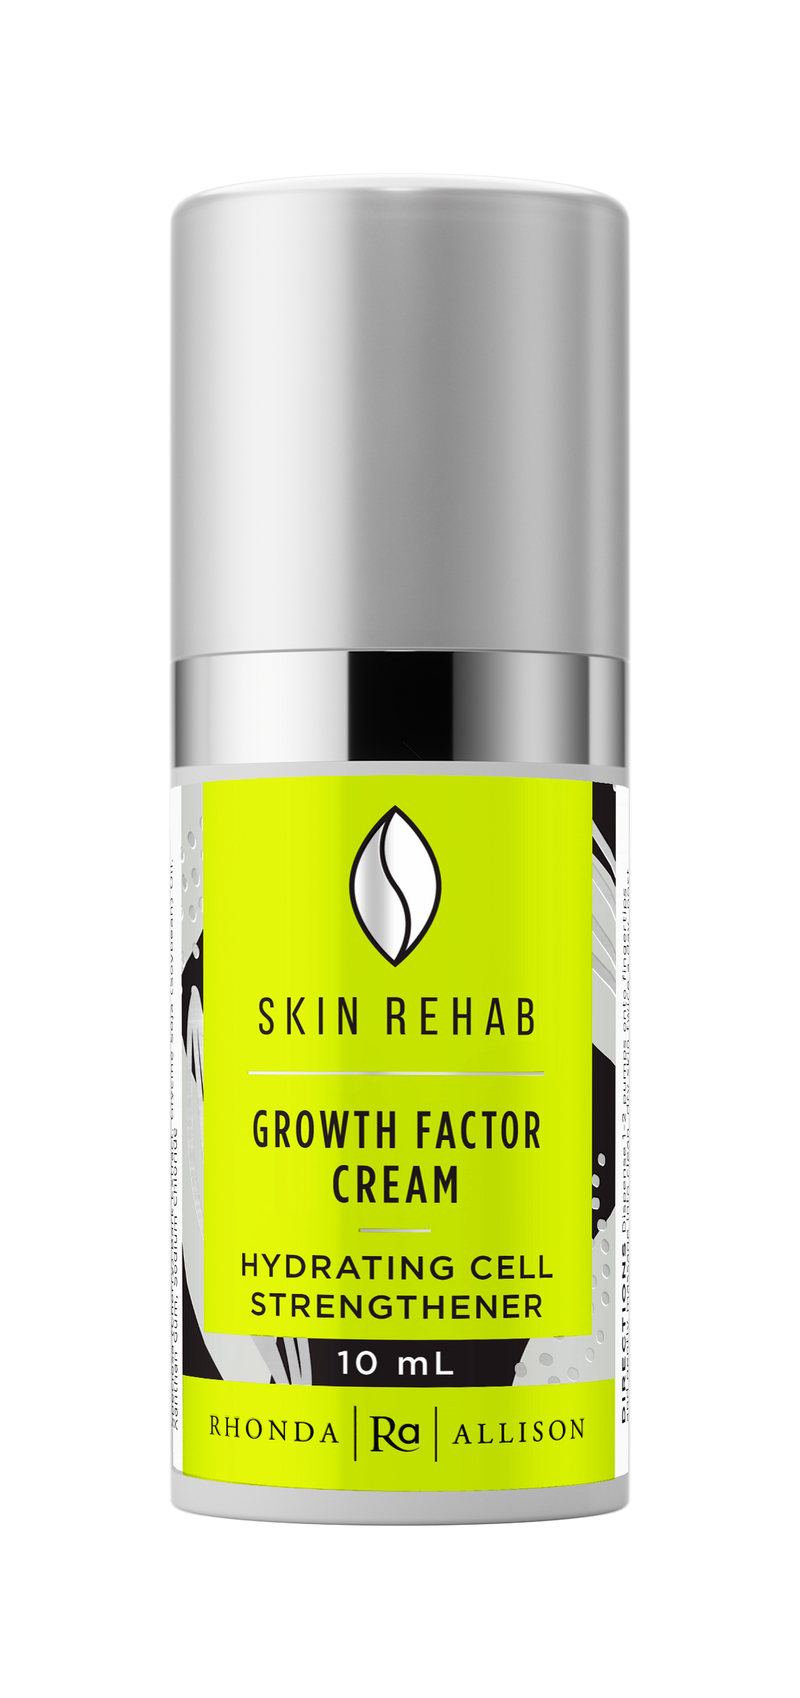 Growth Factor Cream